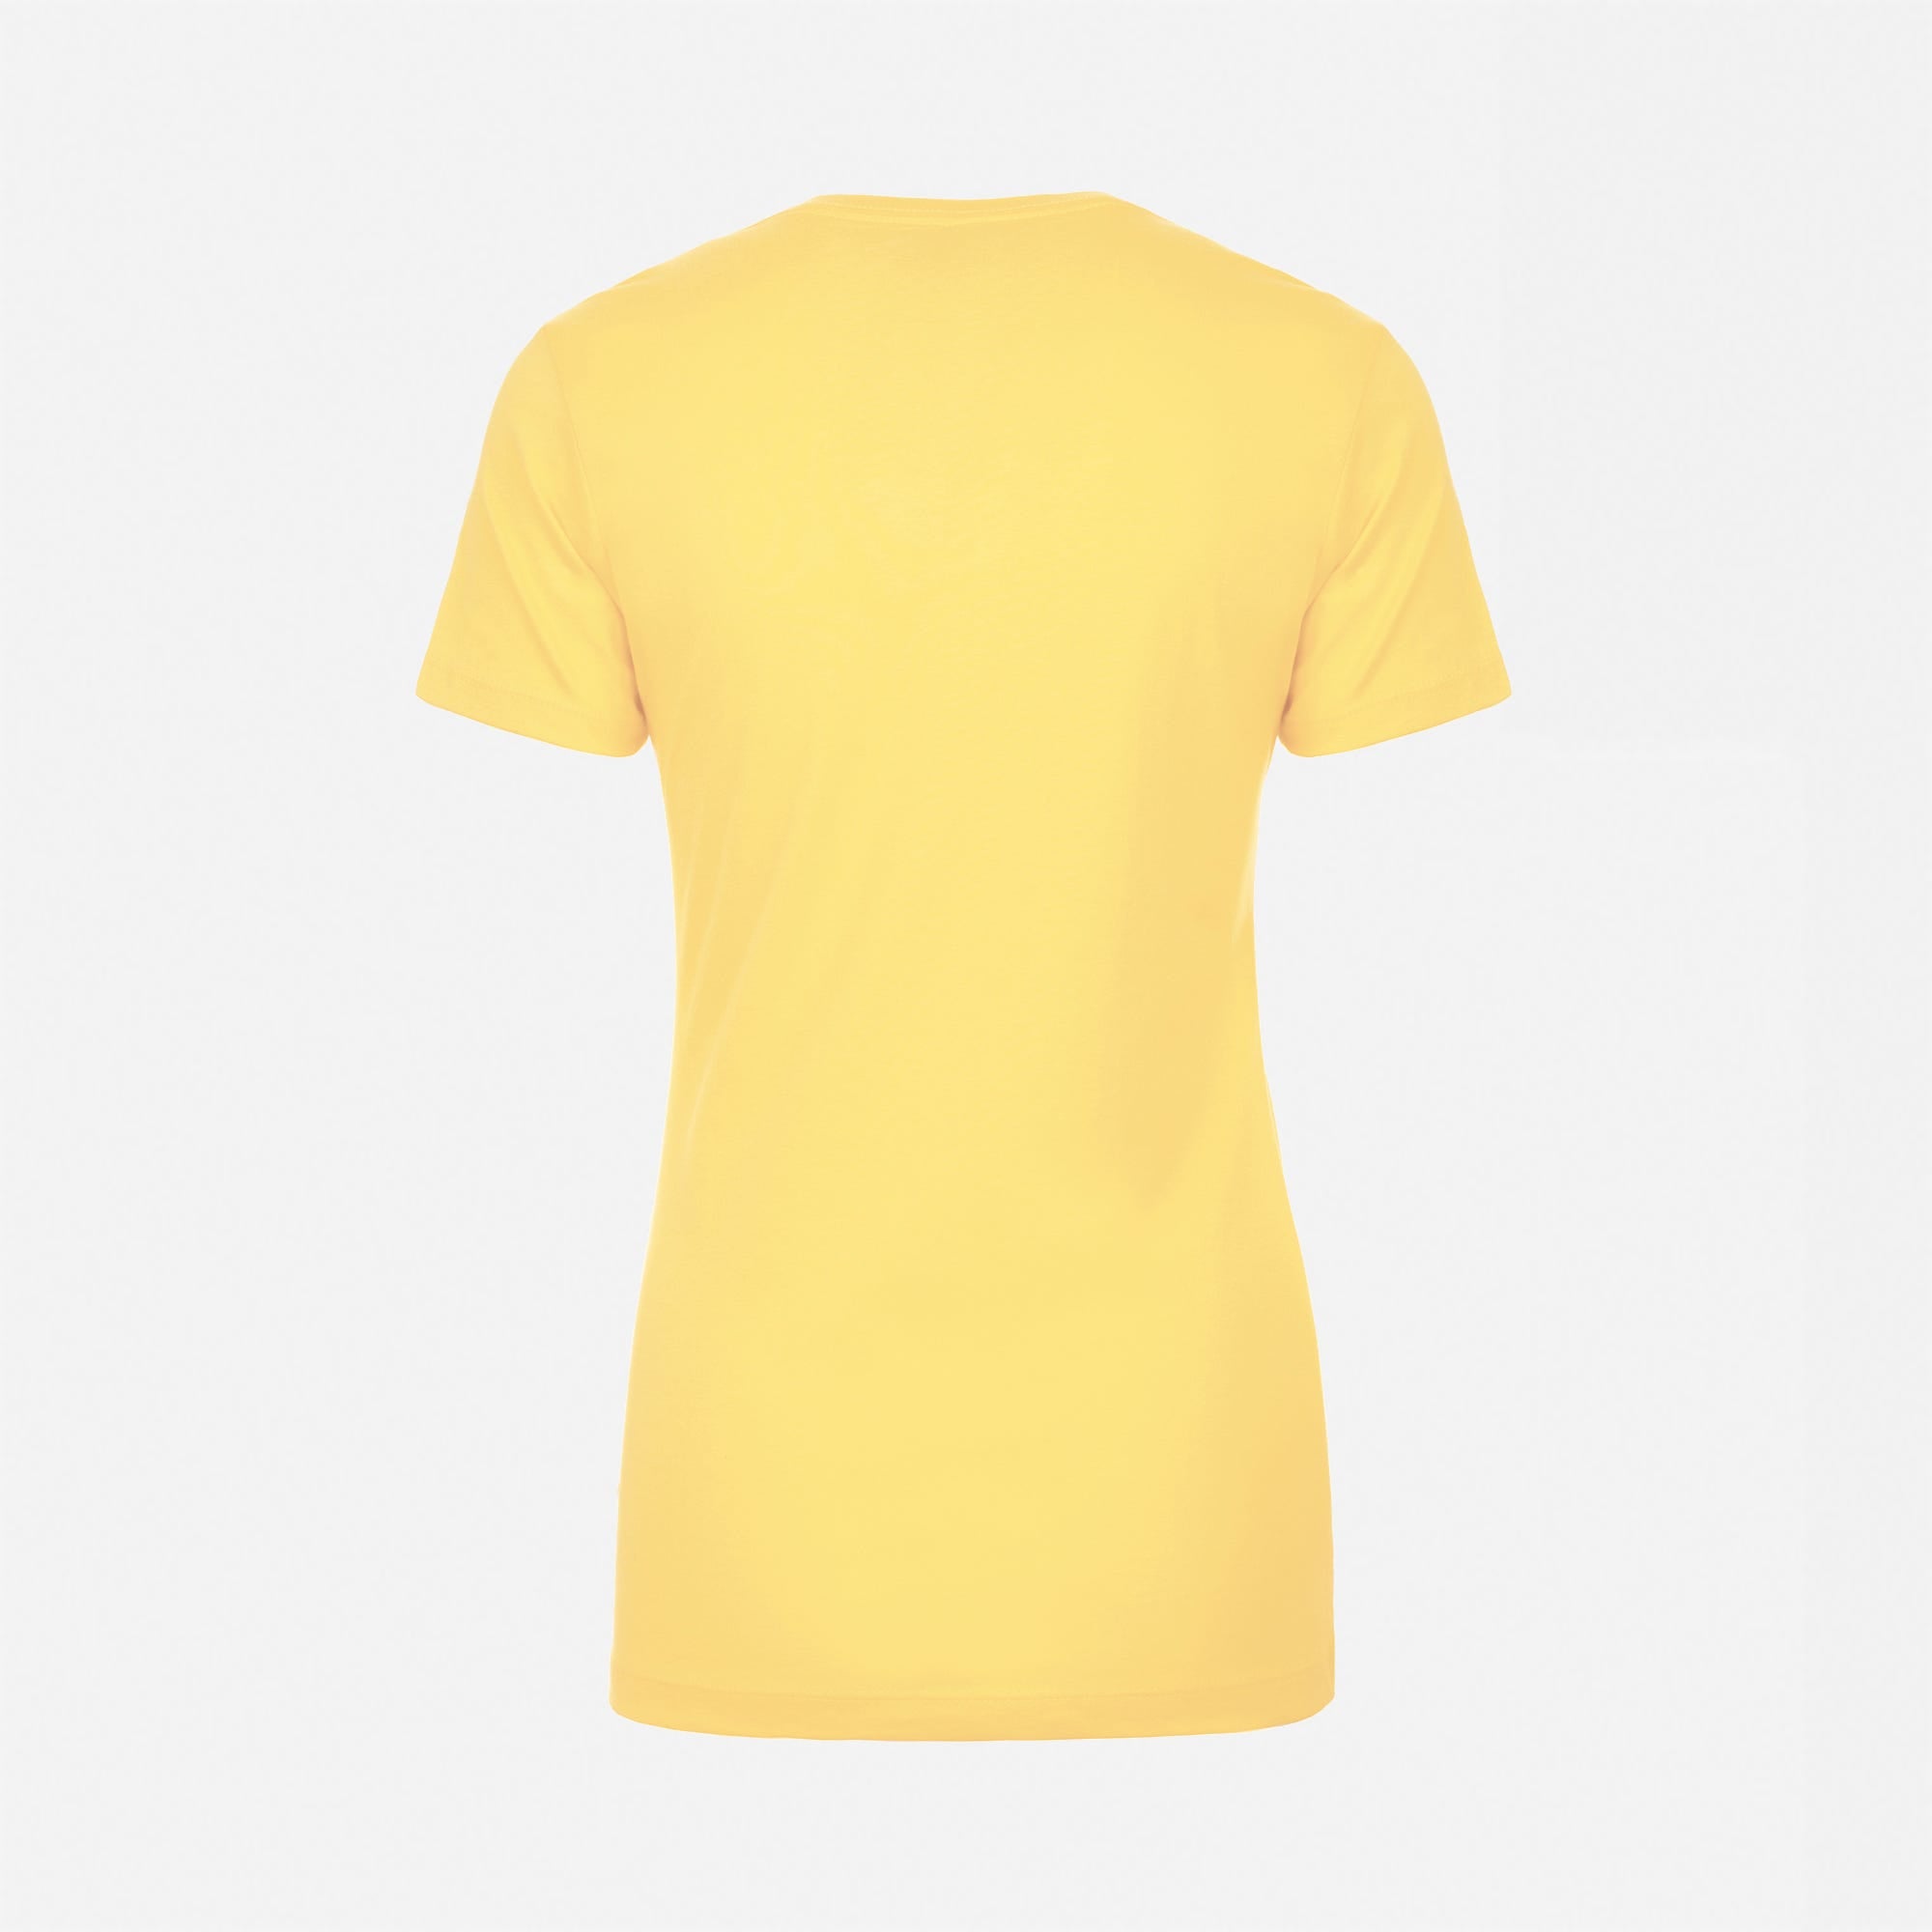 Cotton Boyfriend T-Shirt Vibrant Yellow 3900 Back View Next Level Apparel